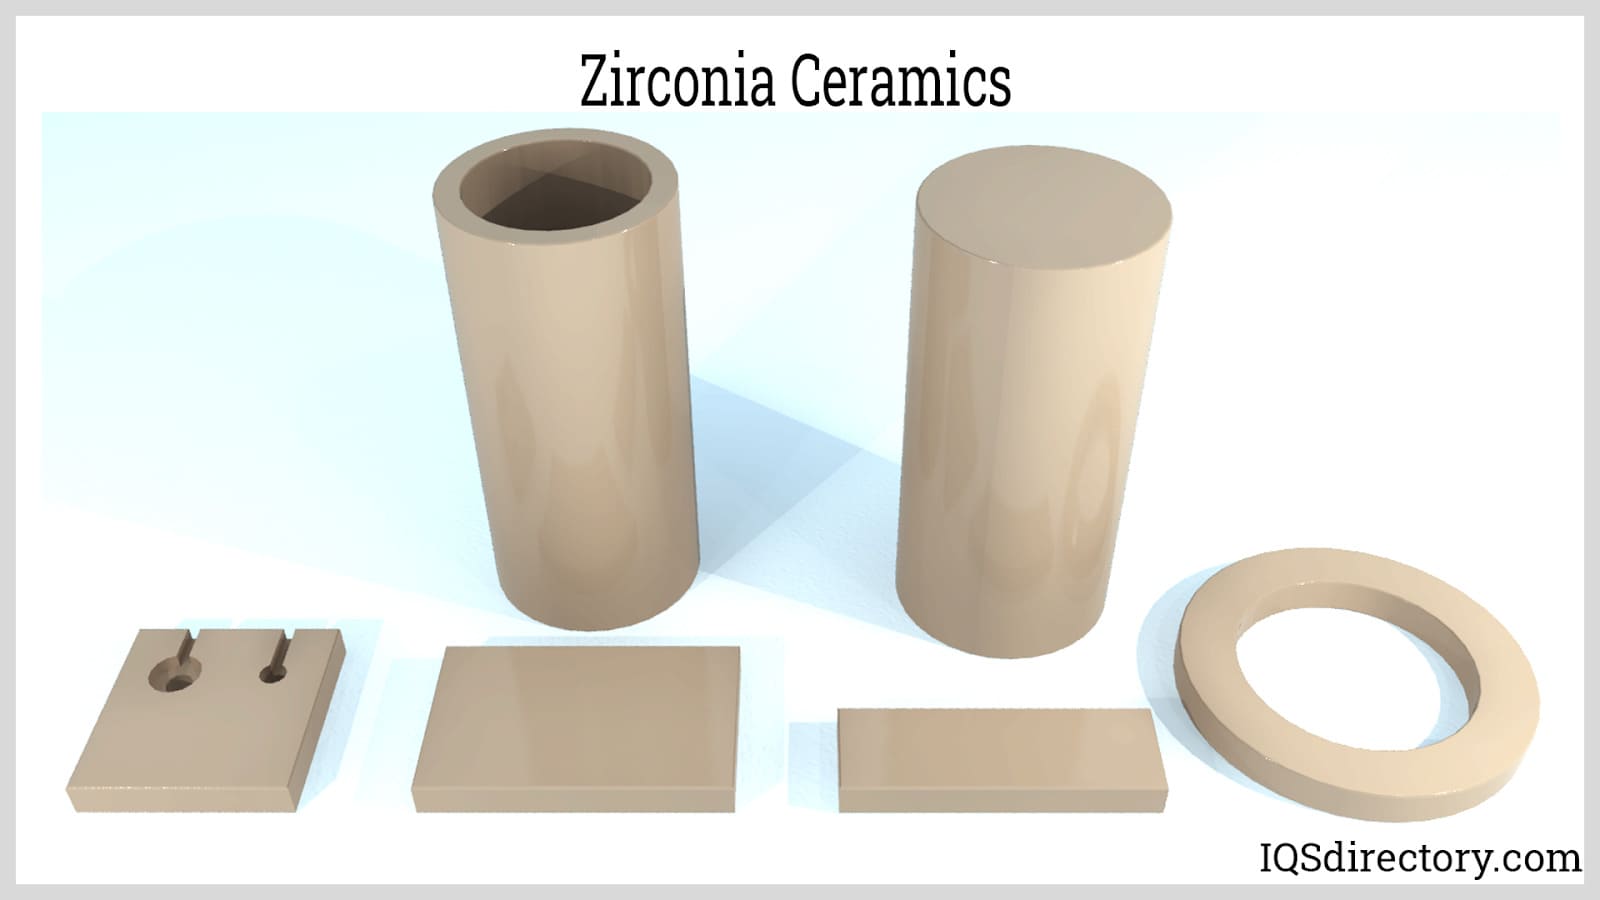 Louisiana | Ceramic Manufacturing Companies